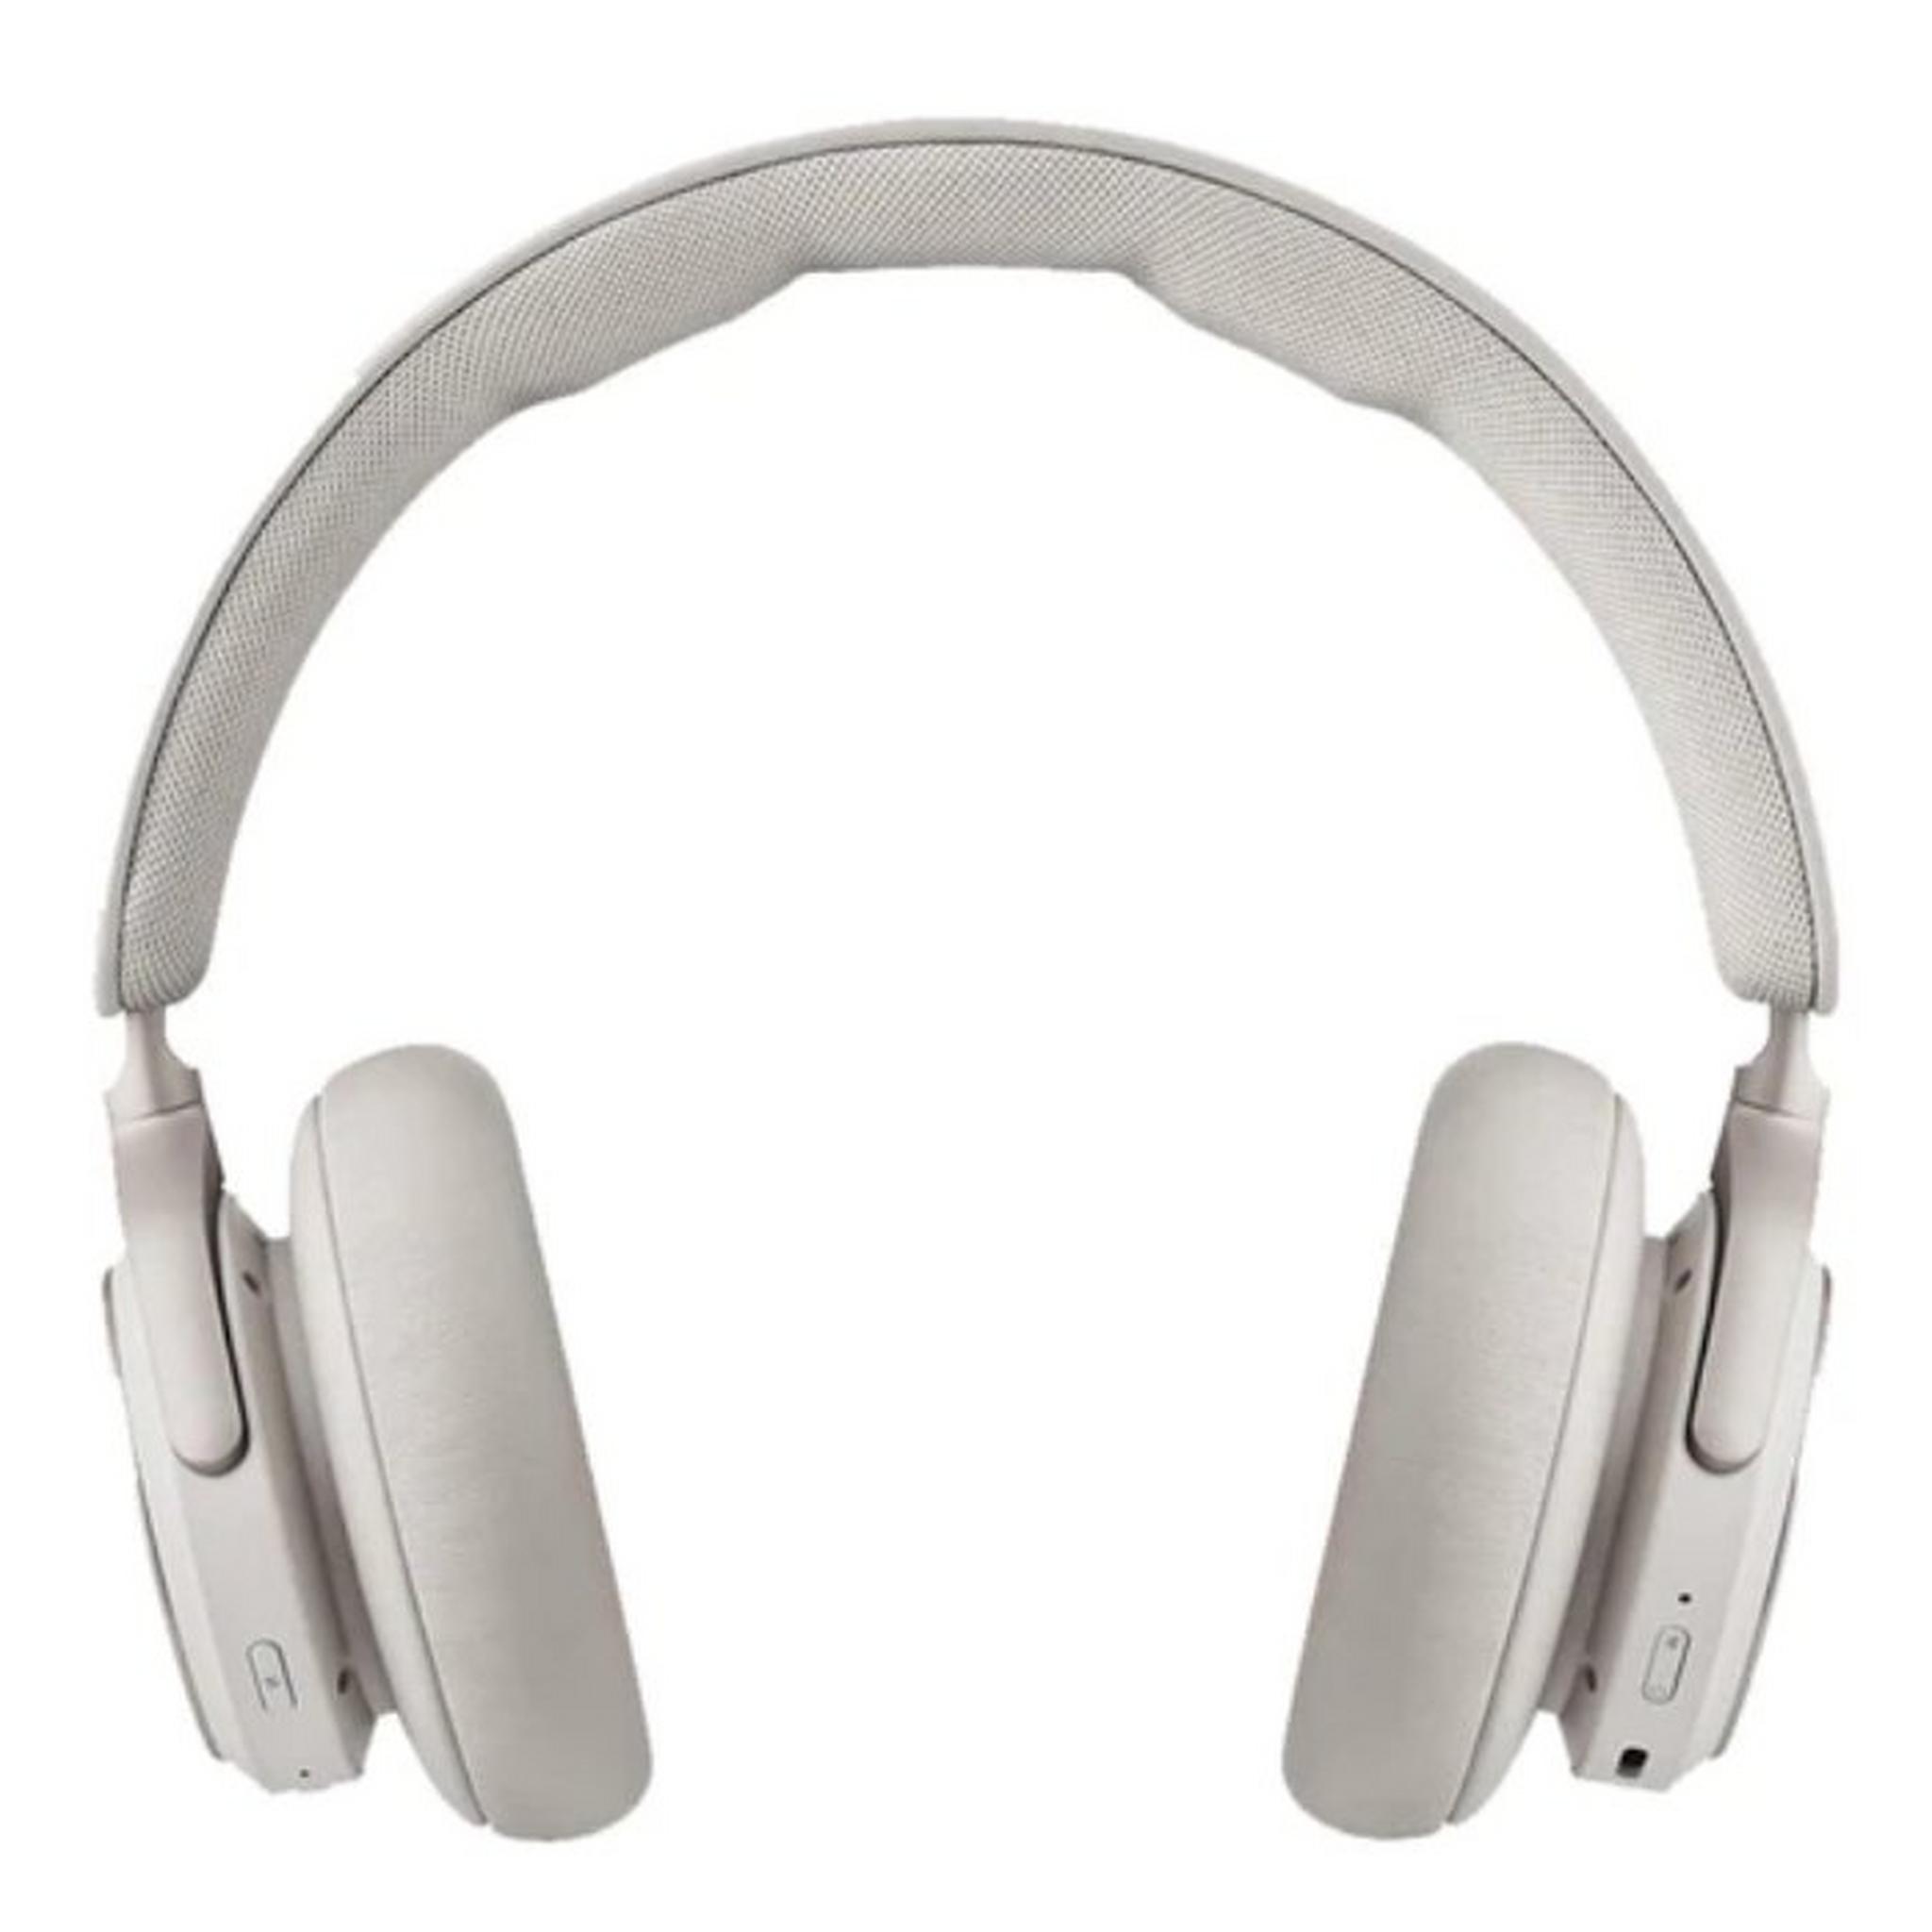 BO & Play Active Noise Cancellation Headphones - Sand